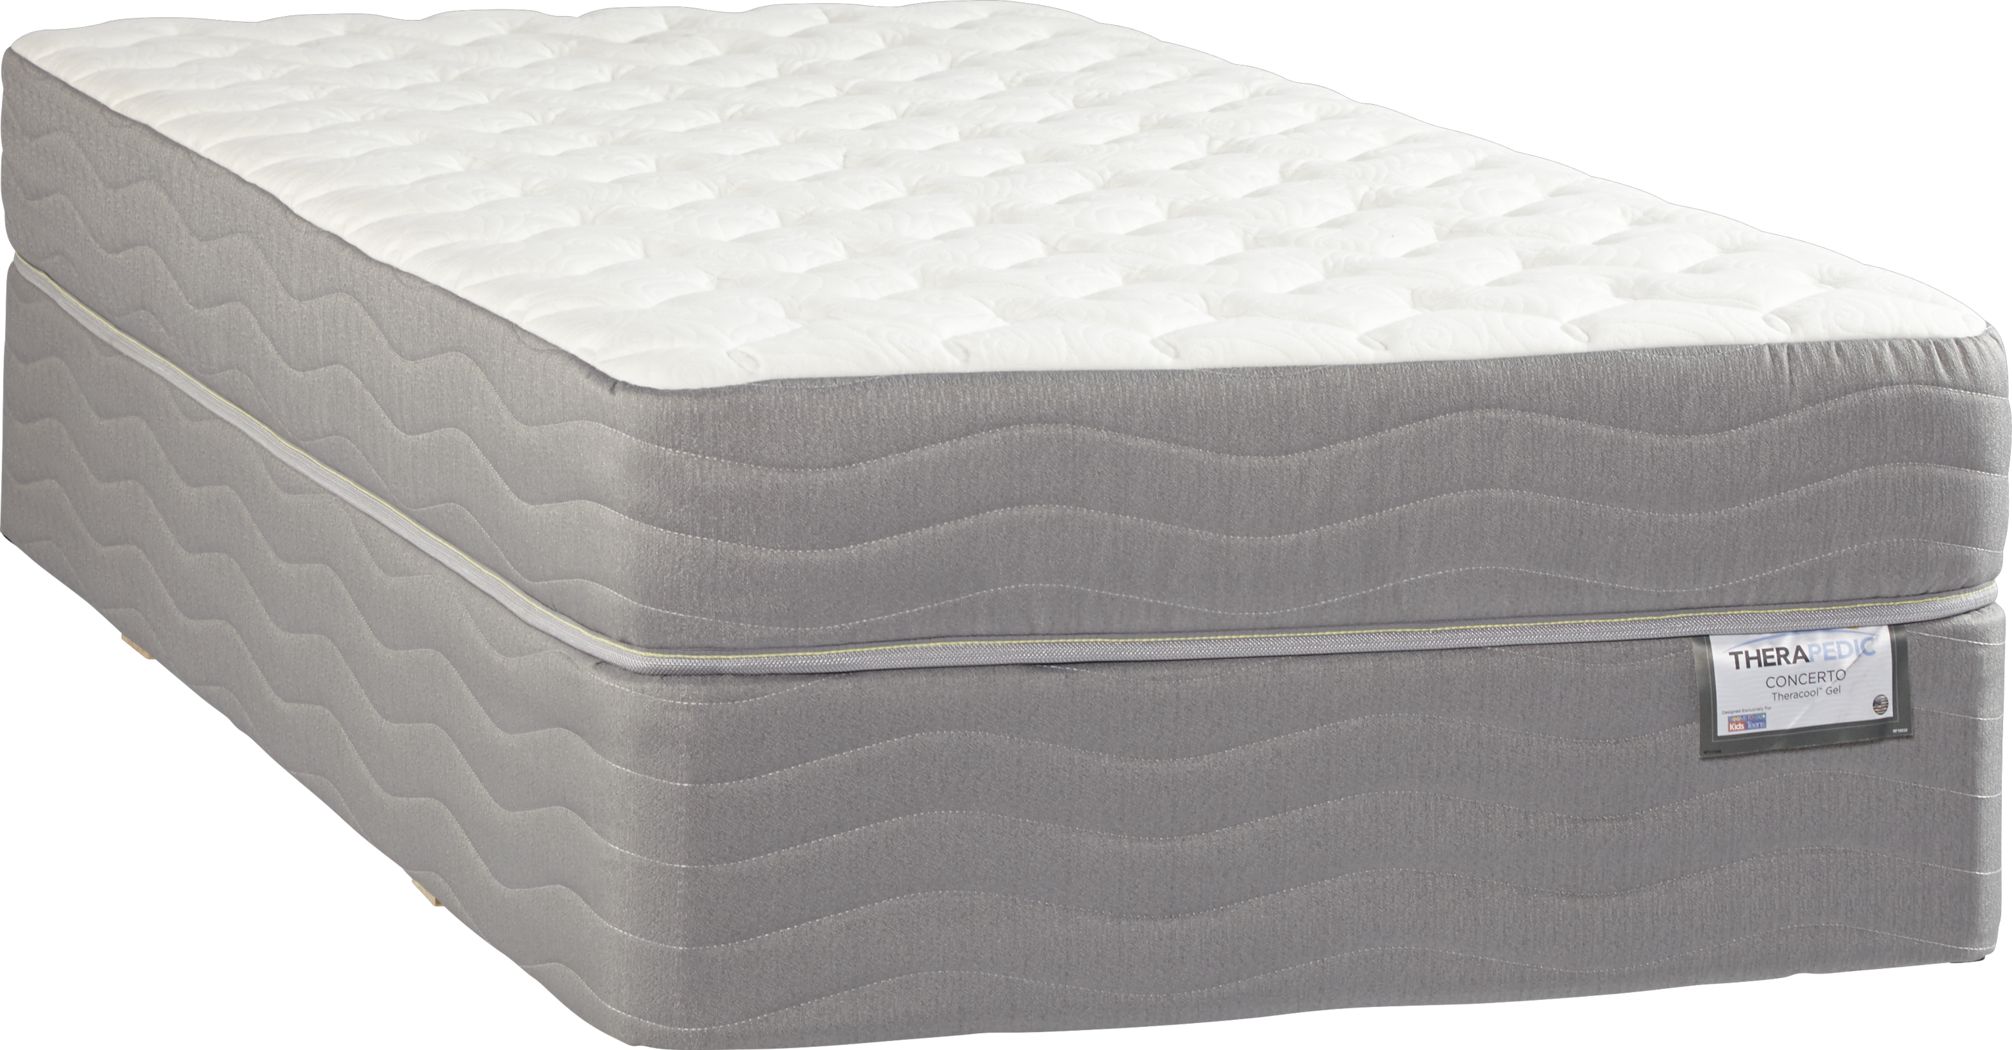 aria collection mattress reviews